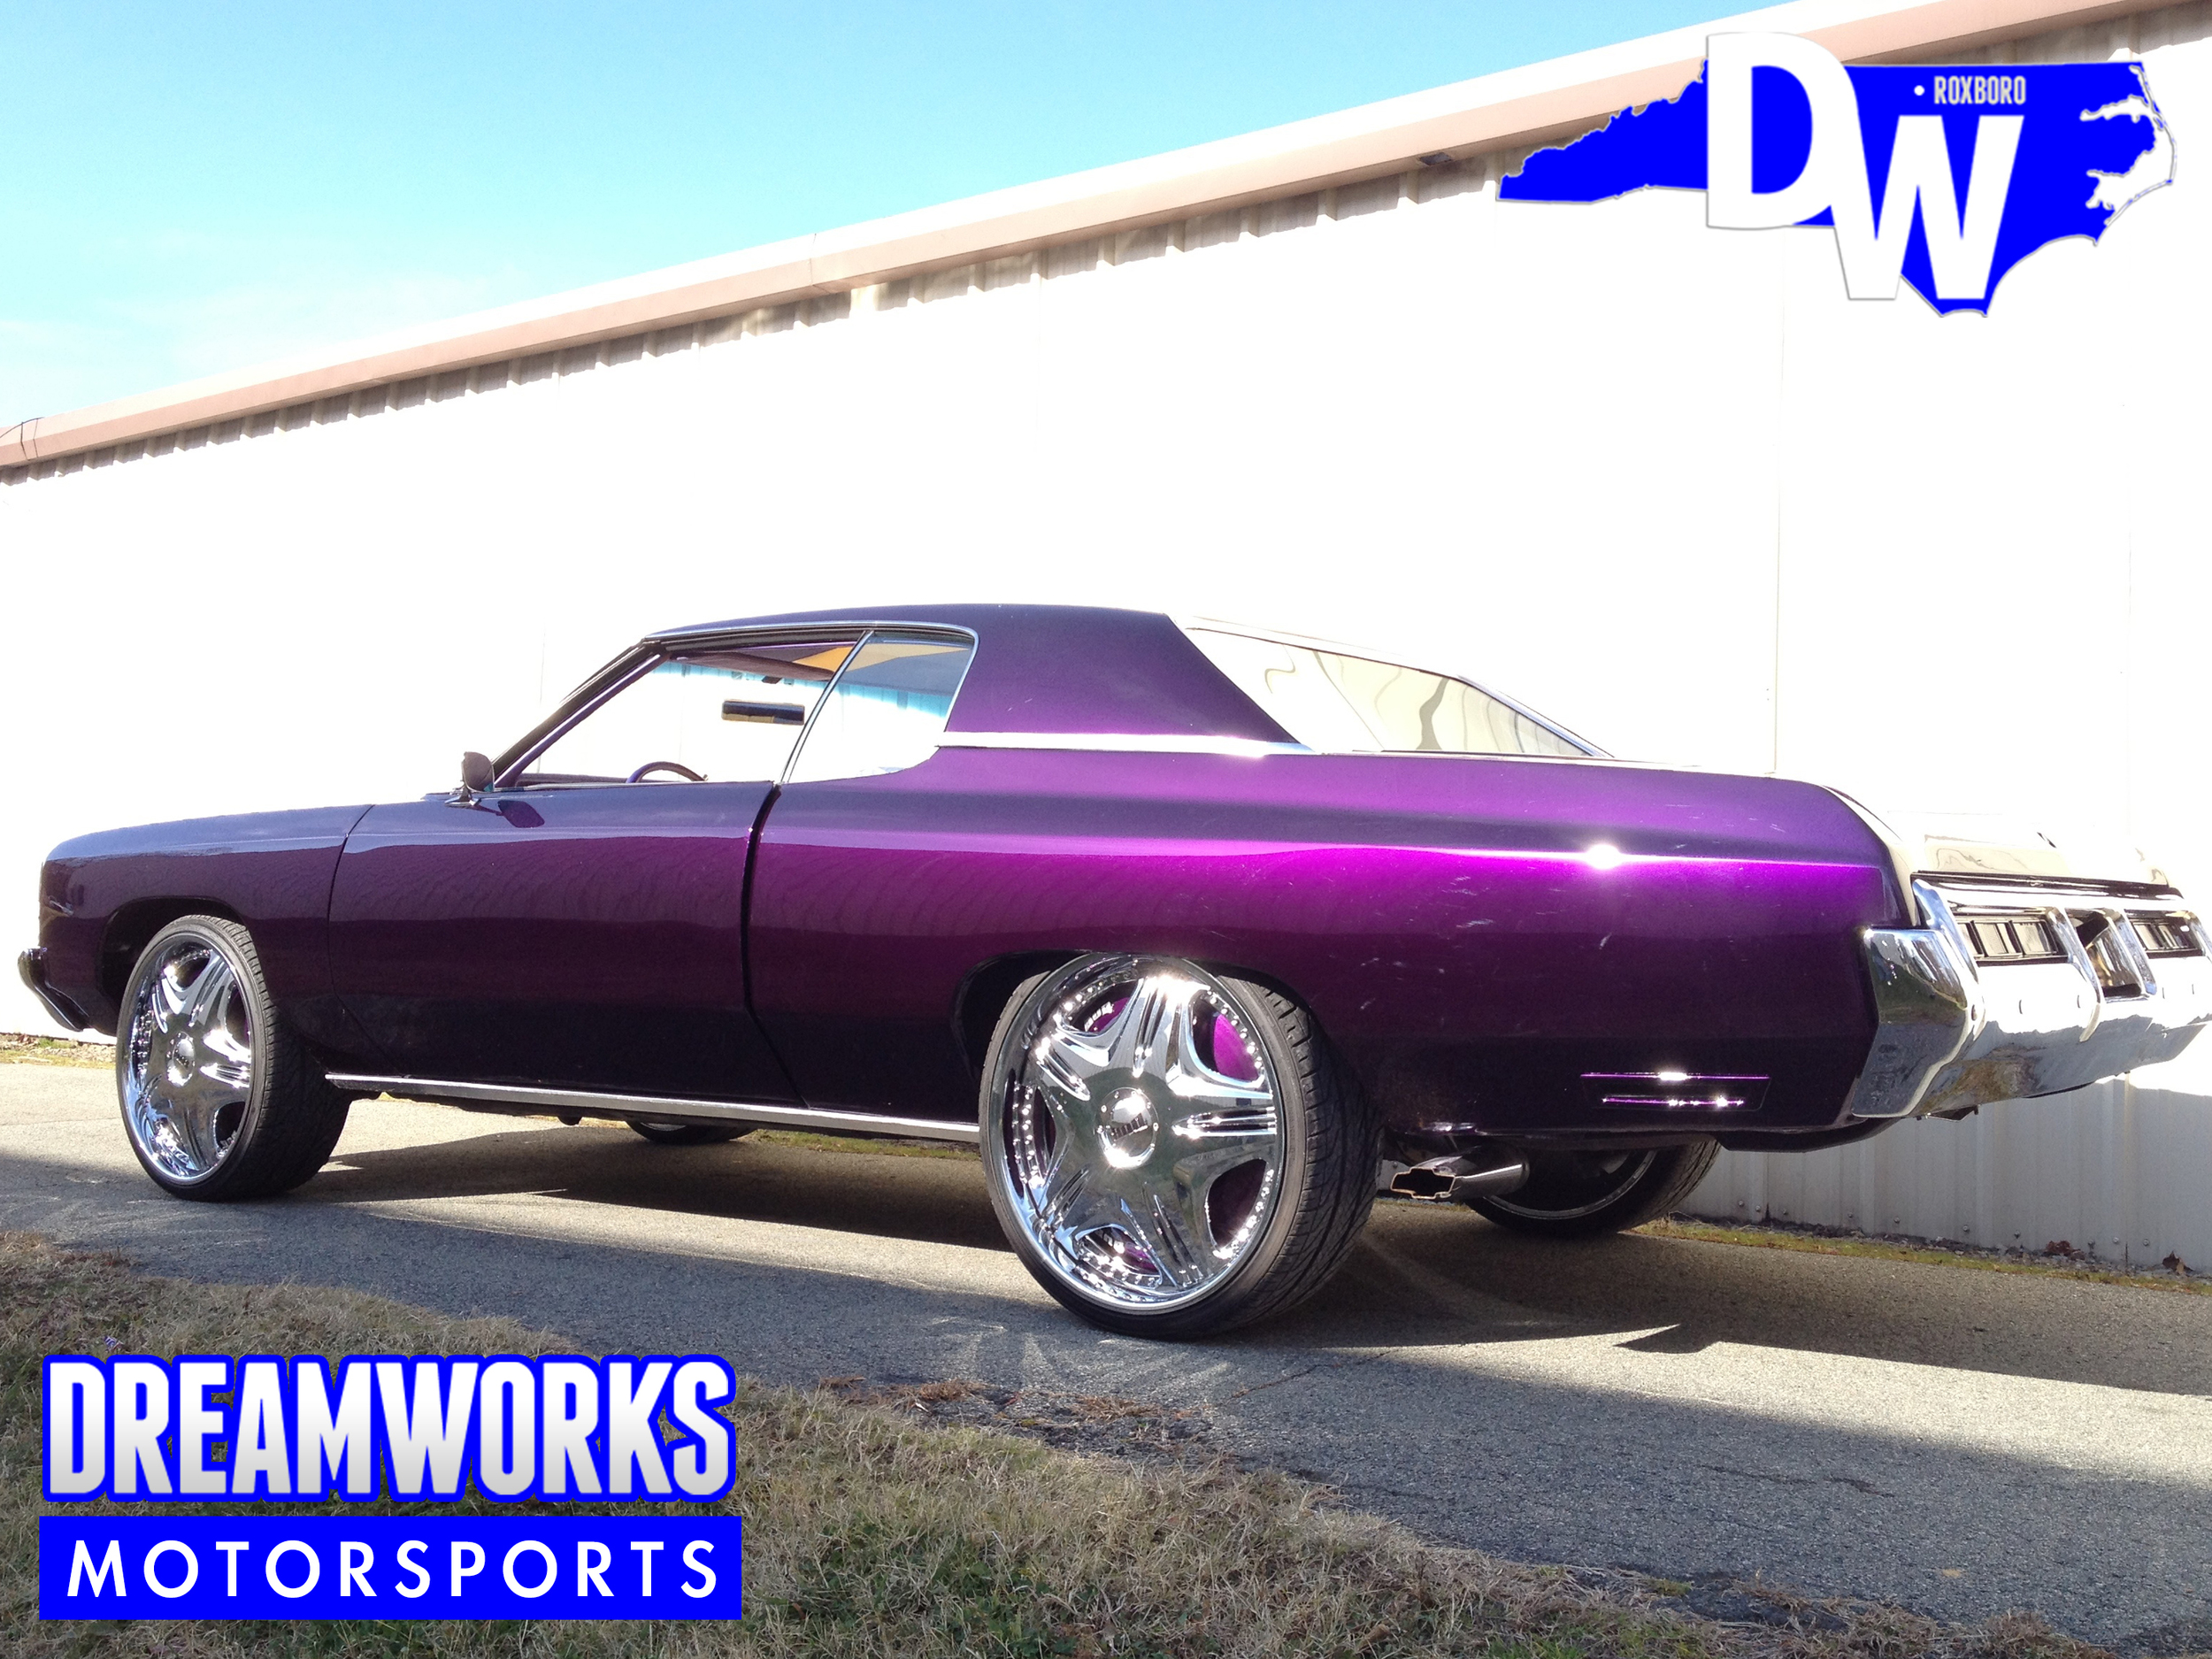 72-Chevrolet-Impala-DUB-Dreamworks-Motorsports-2.jpg